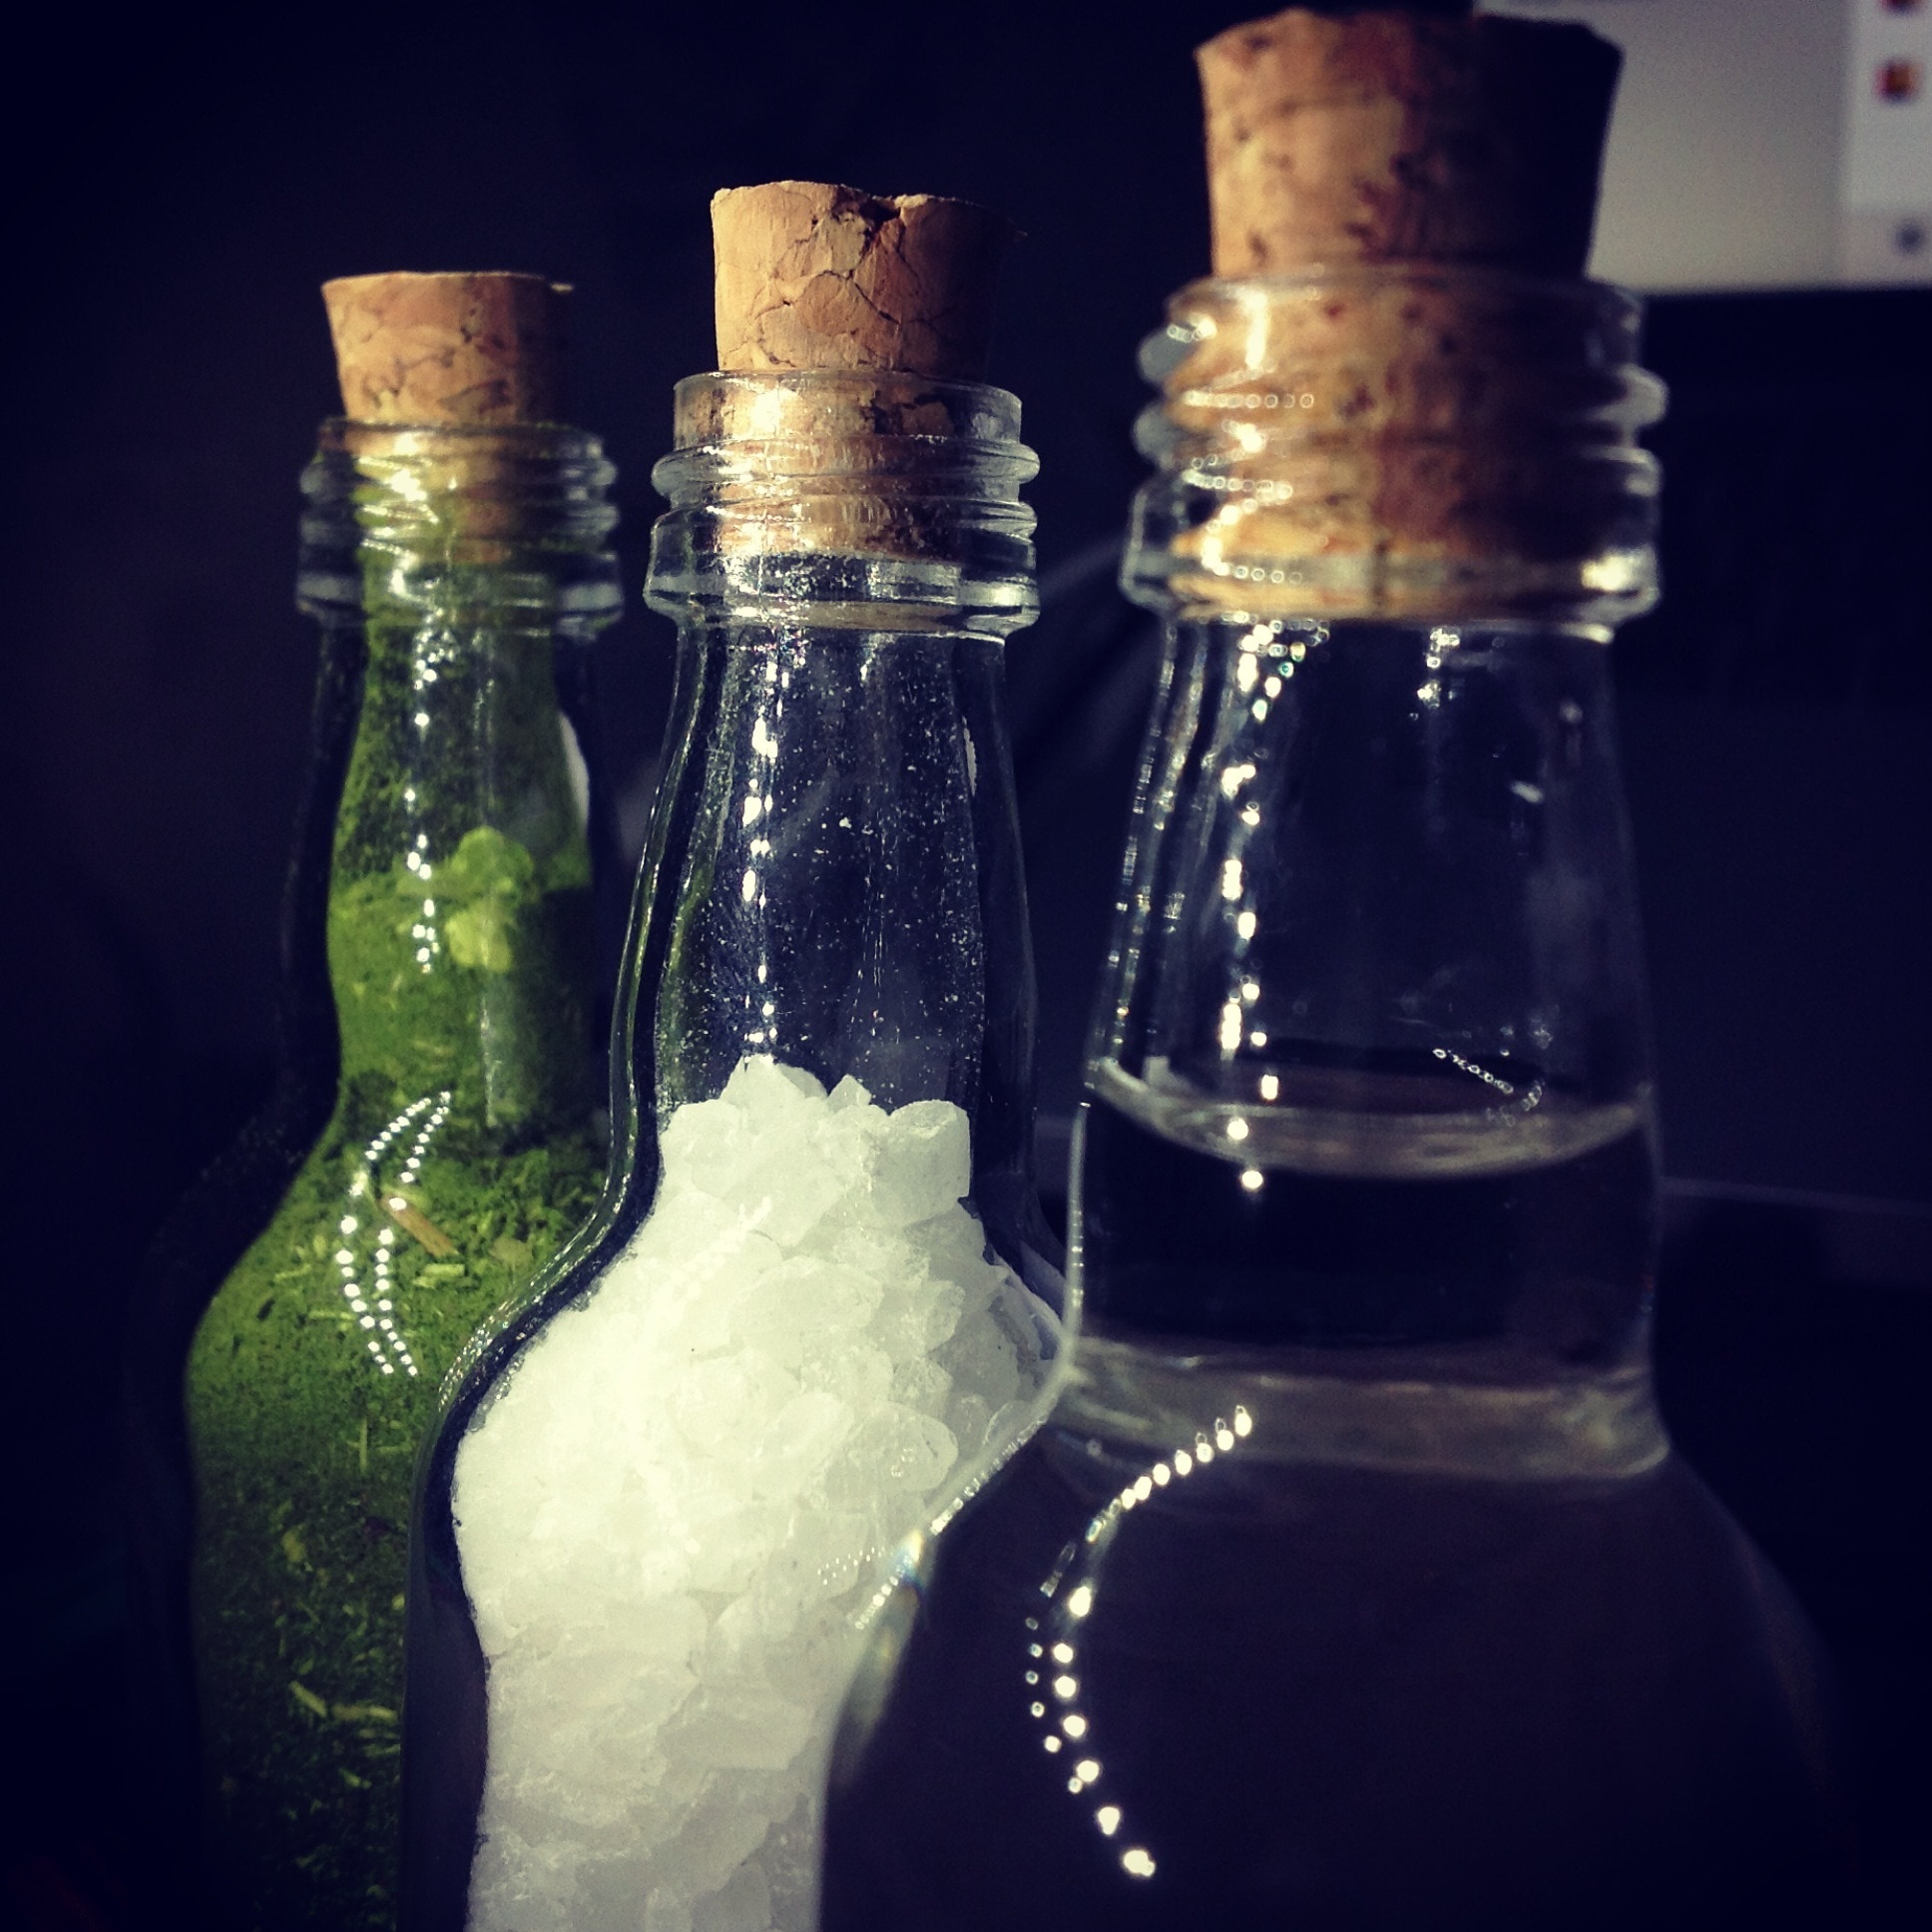 Salt, Herb, Bottle, Aromatherapy, Water, bottle, cork - stopper